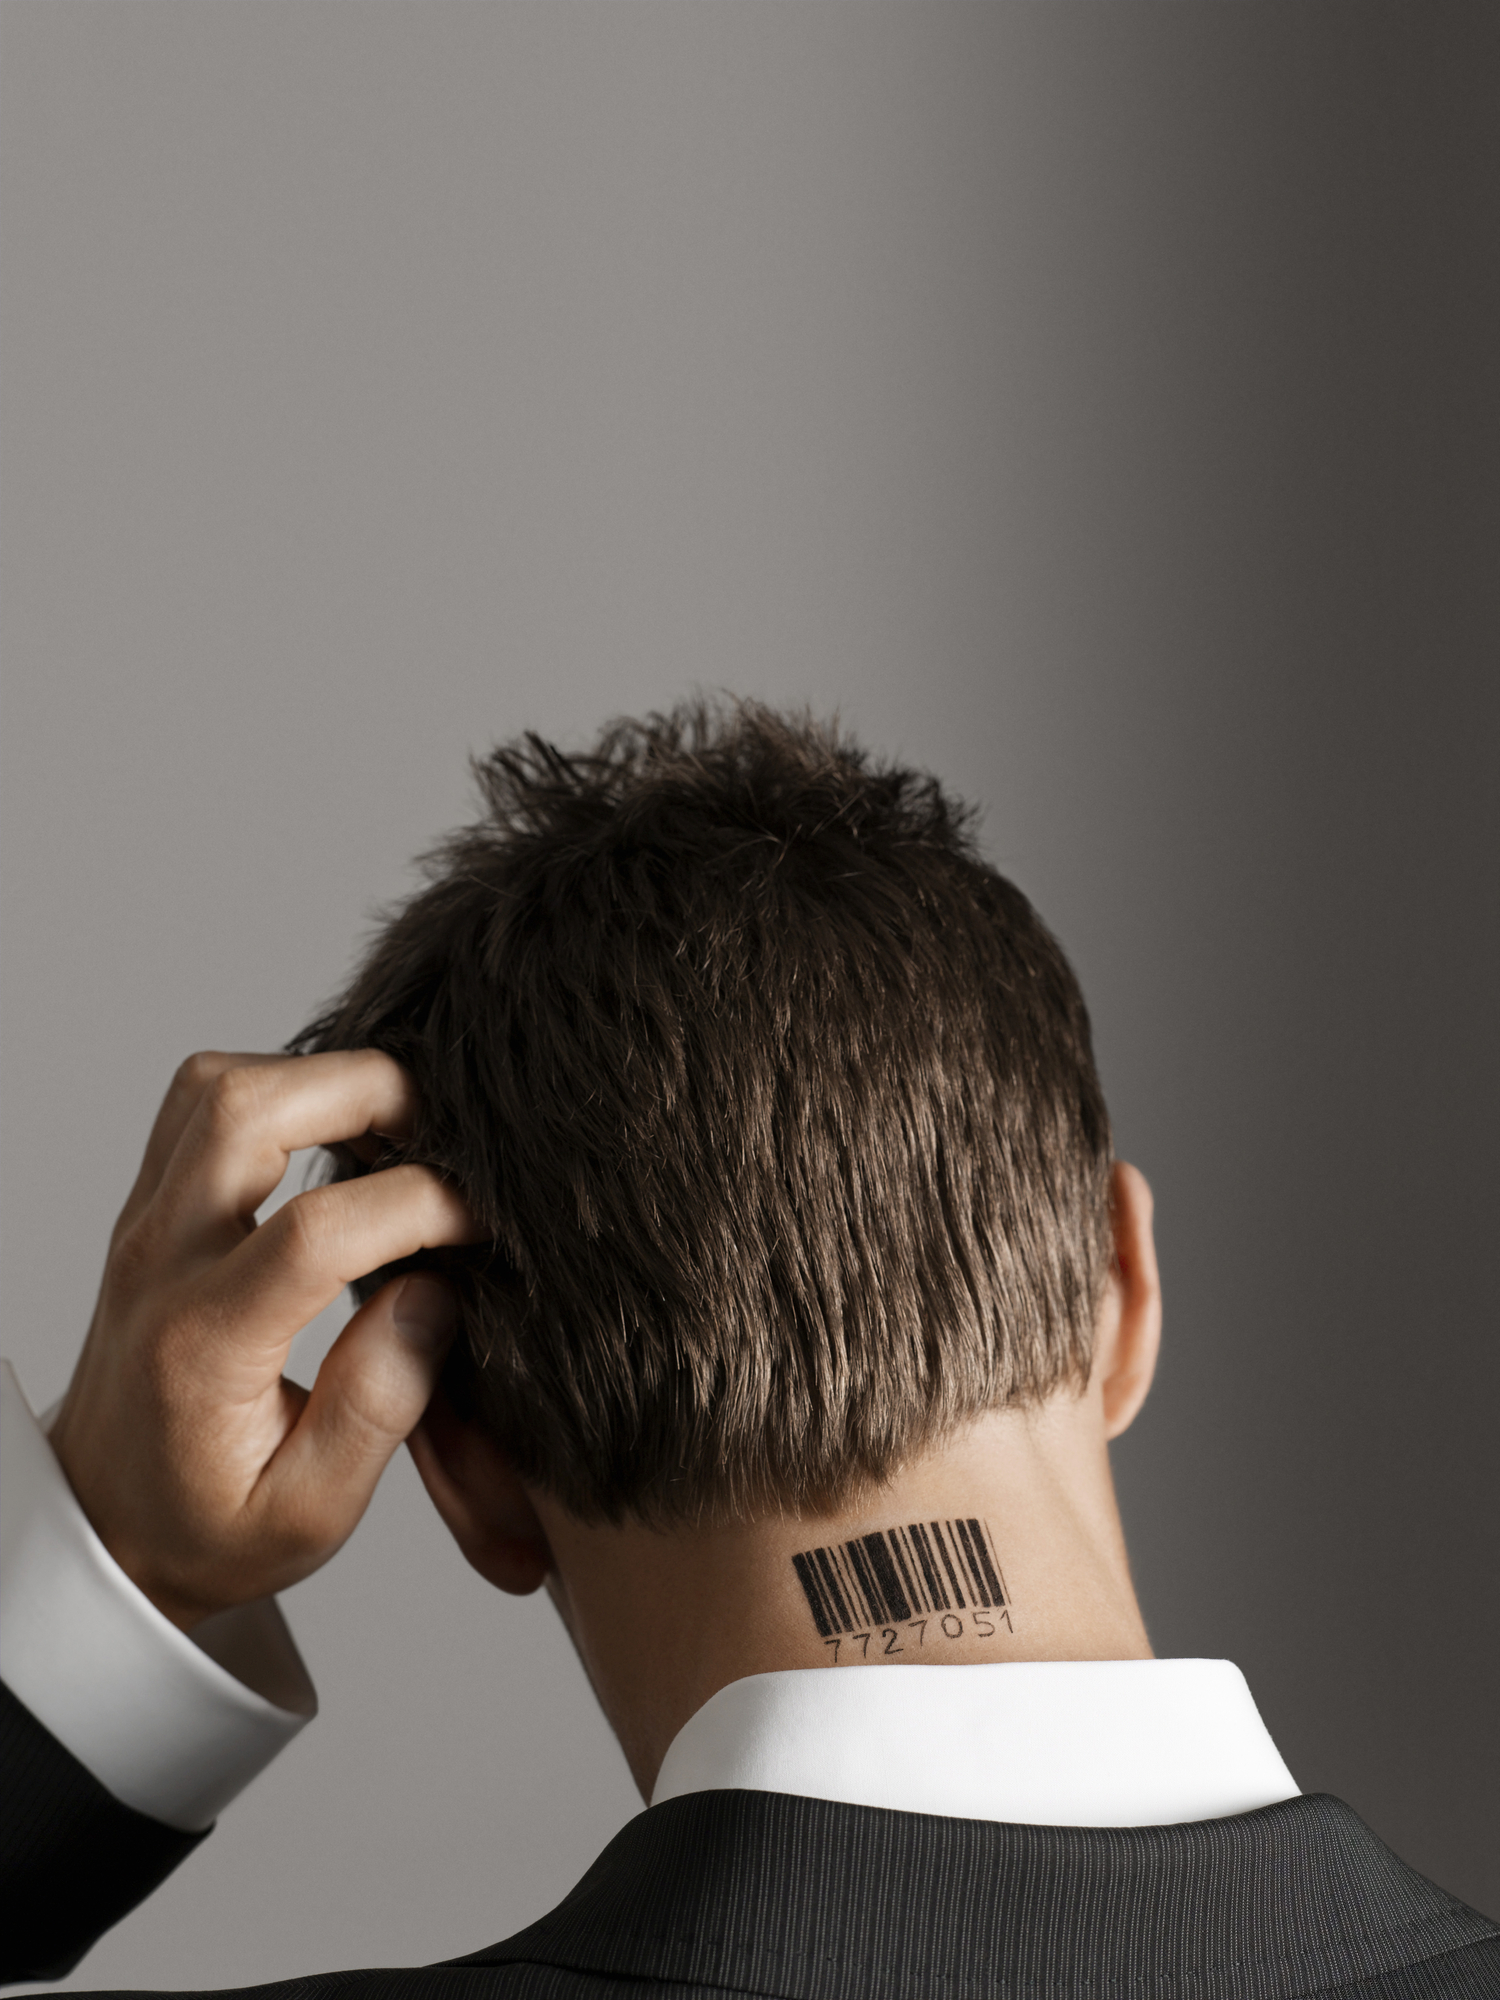 Black Barcode Tattoo On Man Back Neck